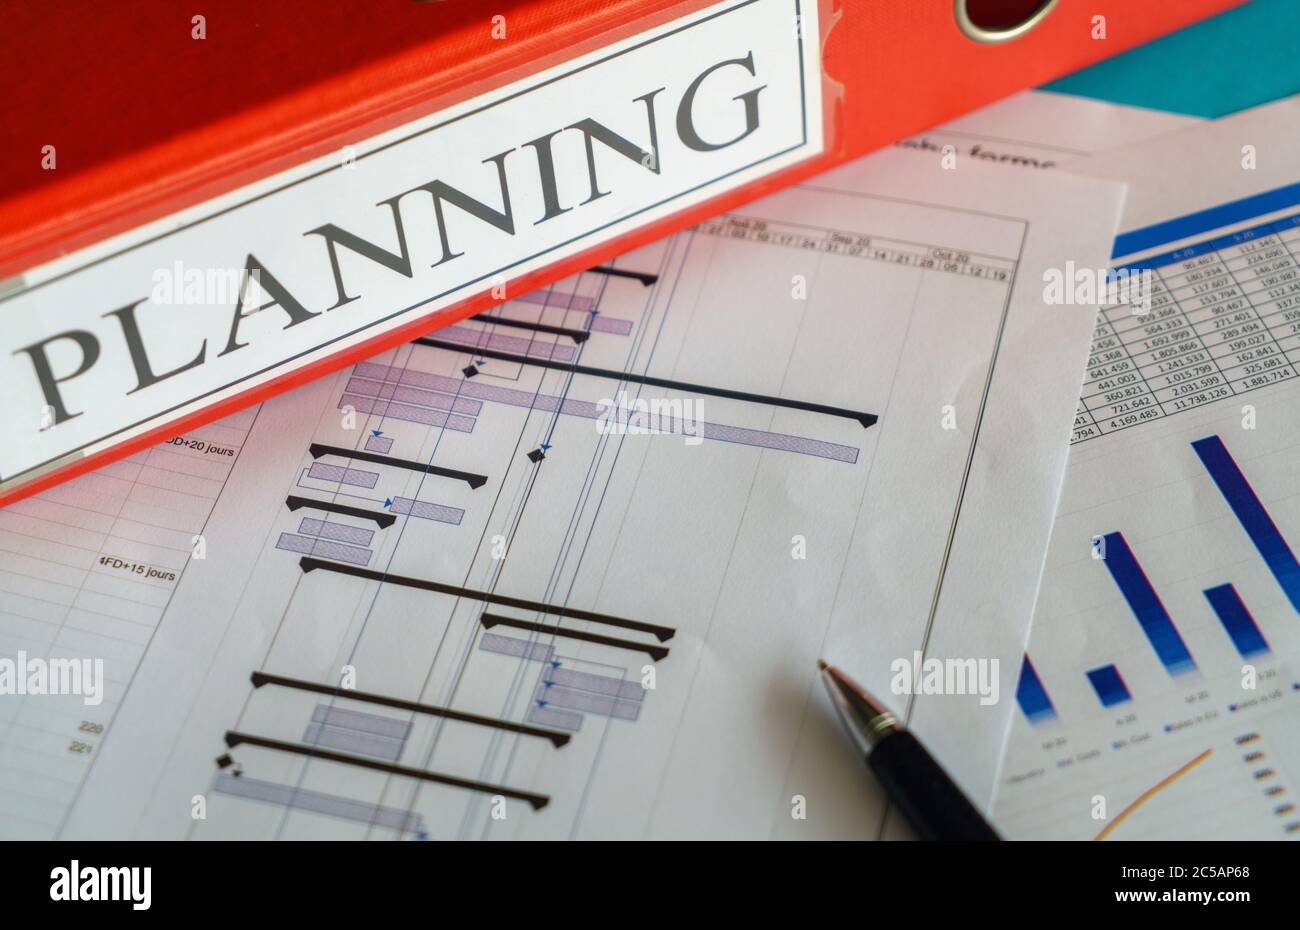 Construction project planning, management concept, gantt chart schedule, blueprints, helmet, calculator different management tools Stock Photo